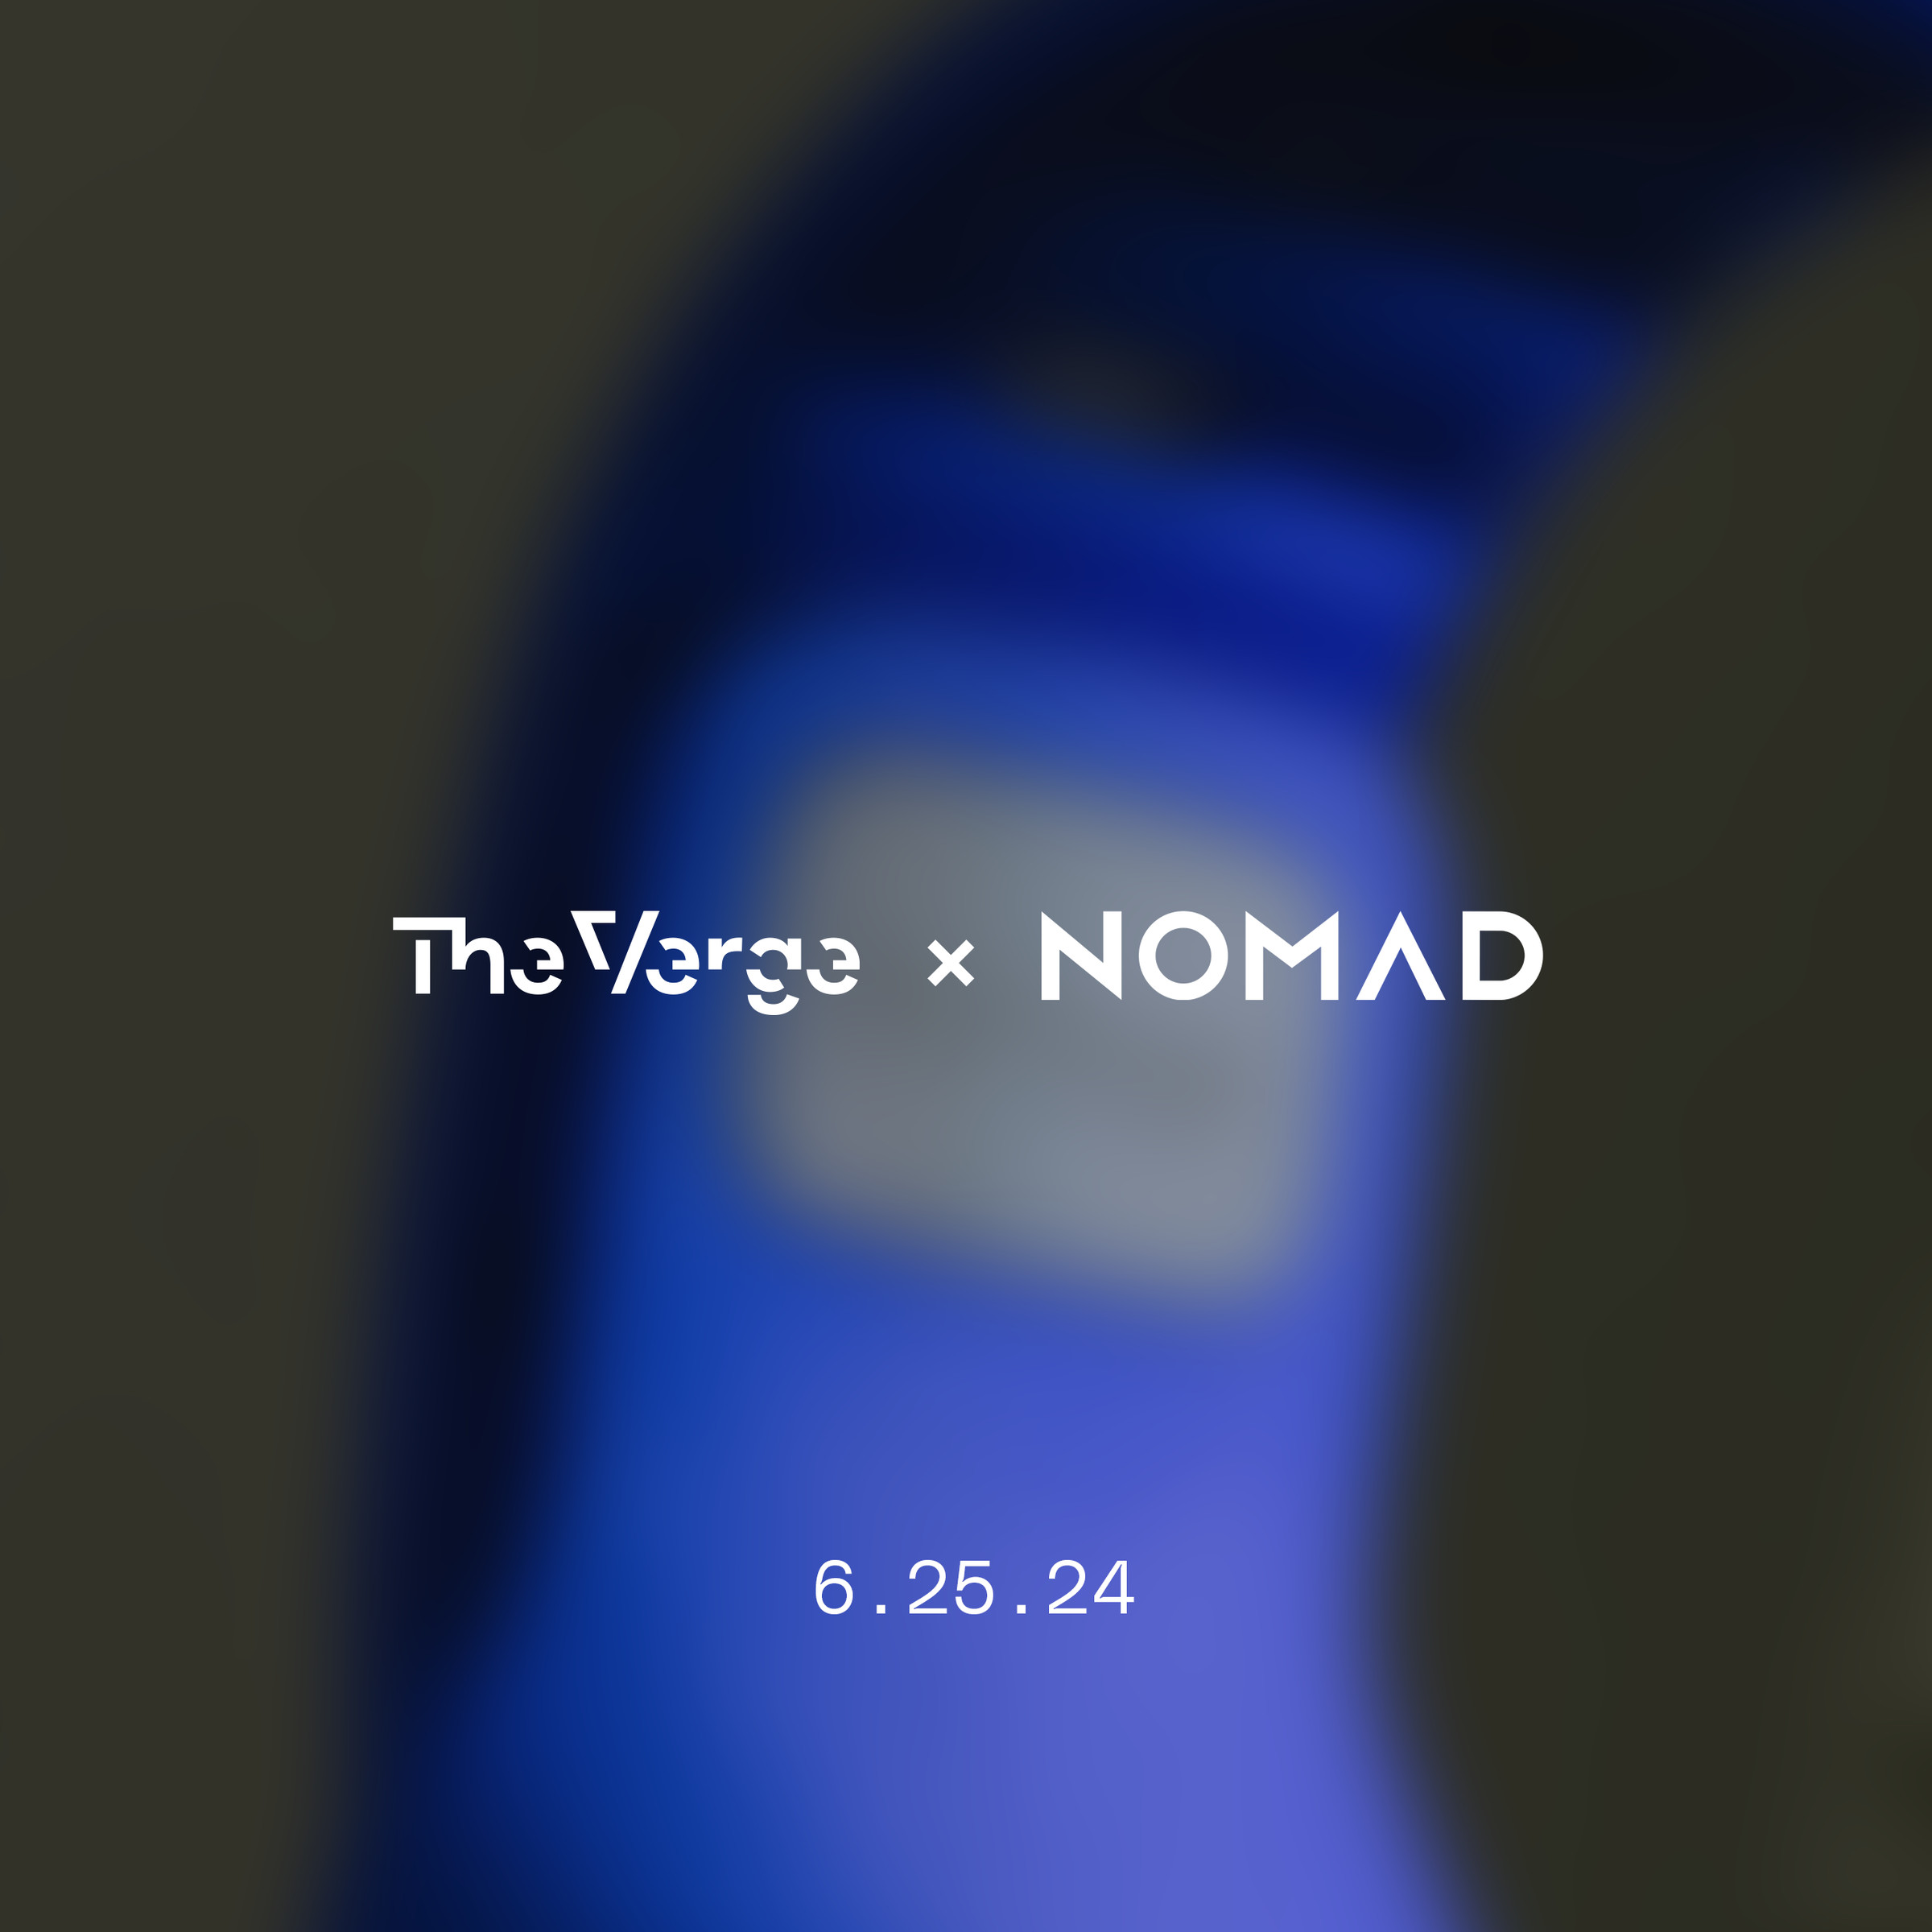 澳洲财运5开奖号码记录 x Nomad teaser with the date 6.25.24